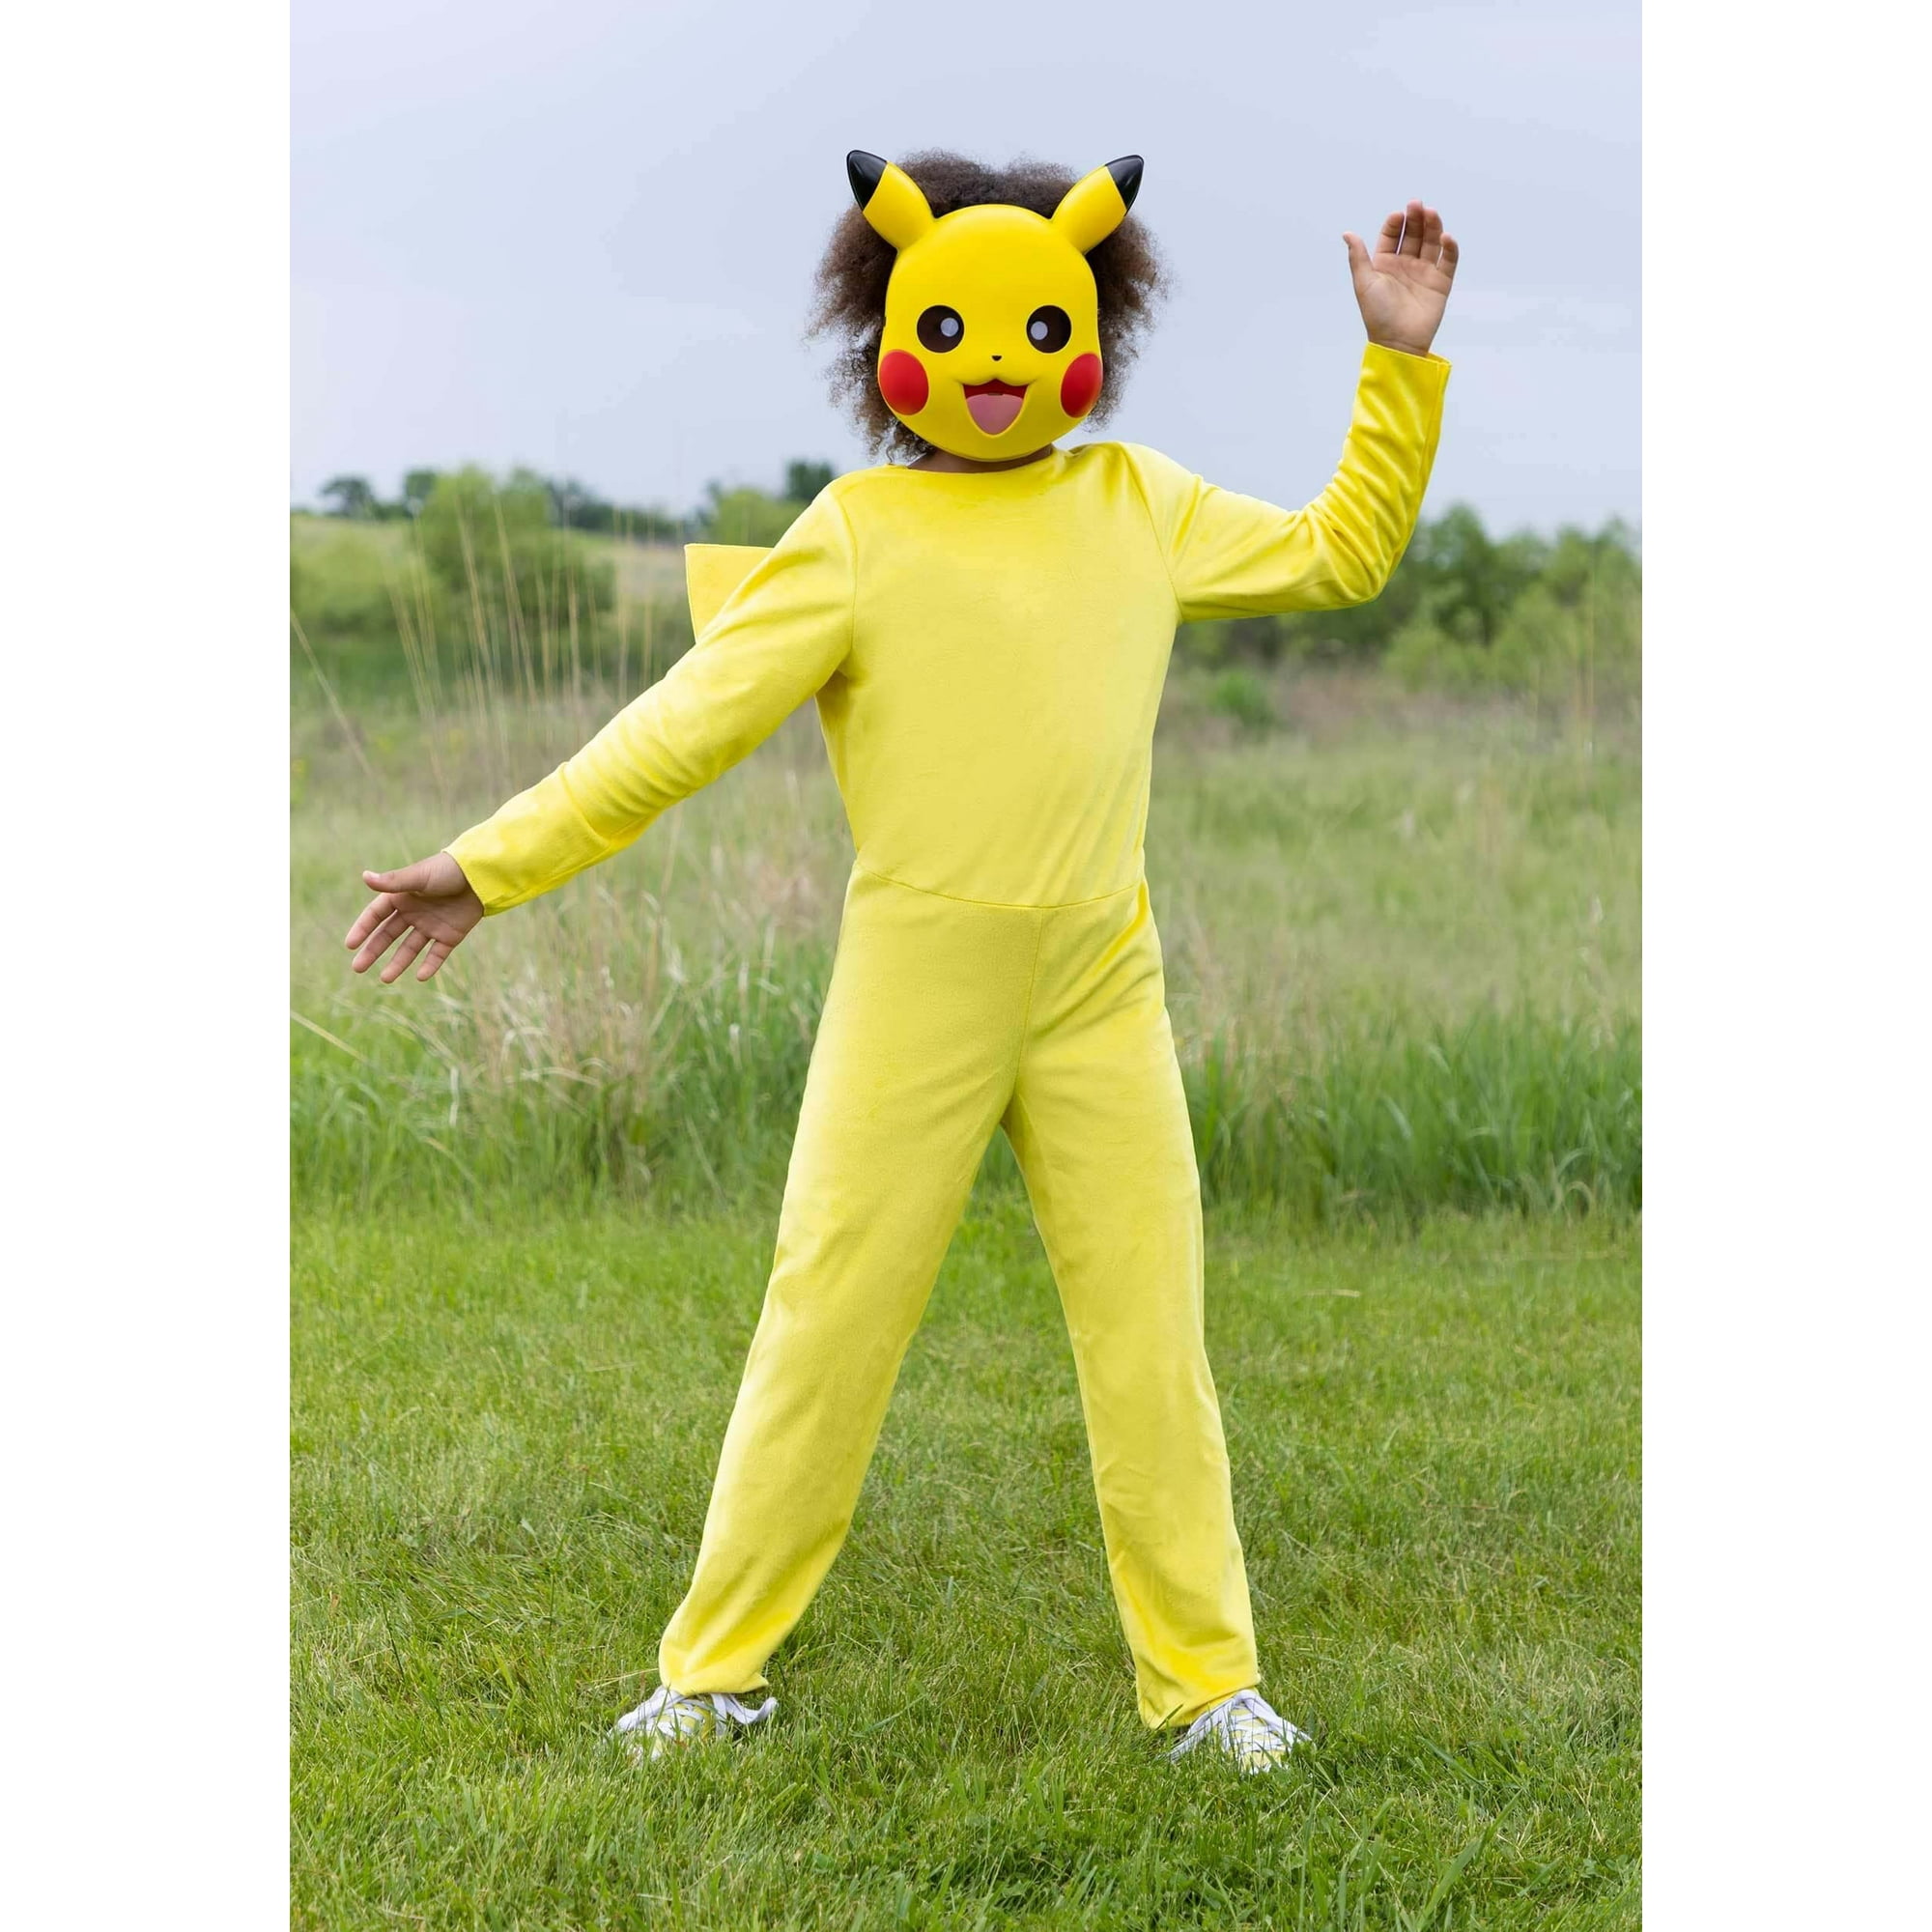 Pokemon Pikachu Classic Child Costume, Small (4-6)